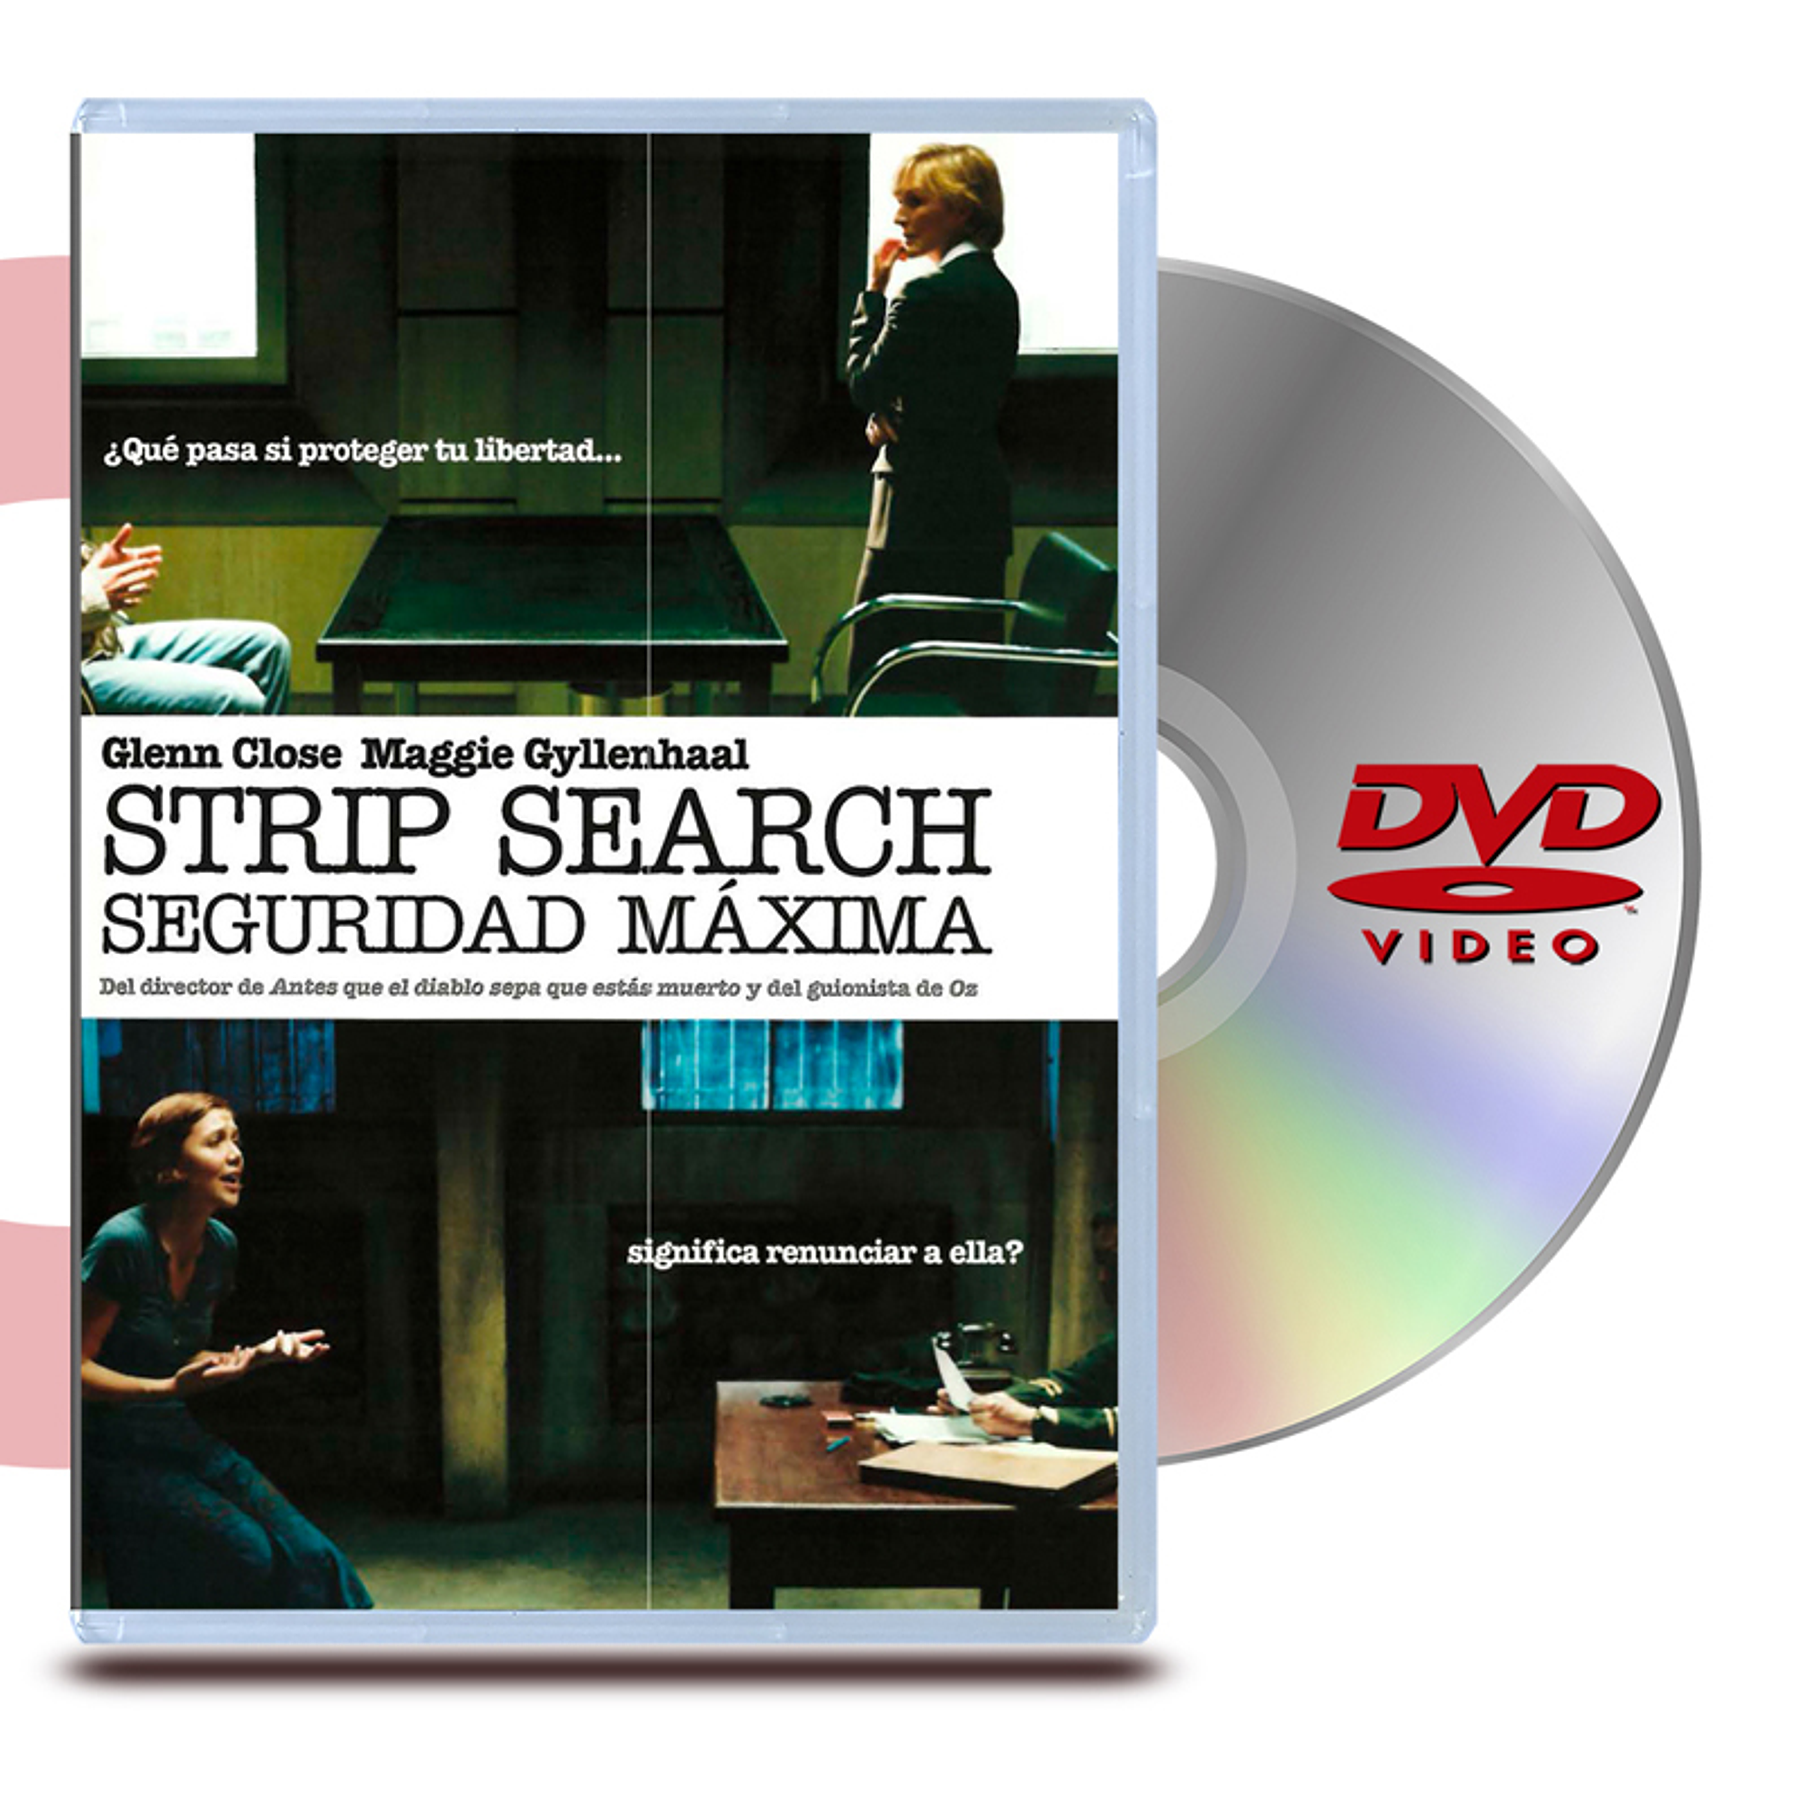 DVD STRIP SEARCH: MAXIMA SEGURIDAD